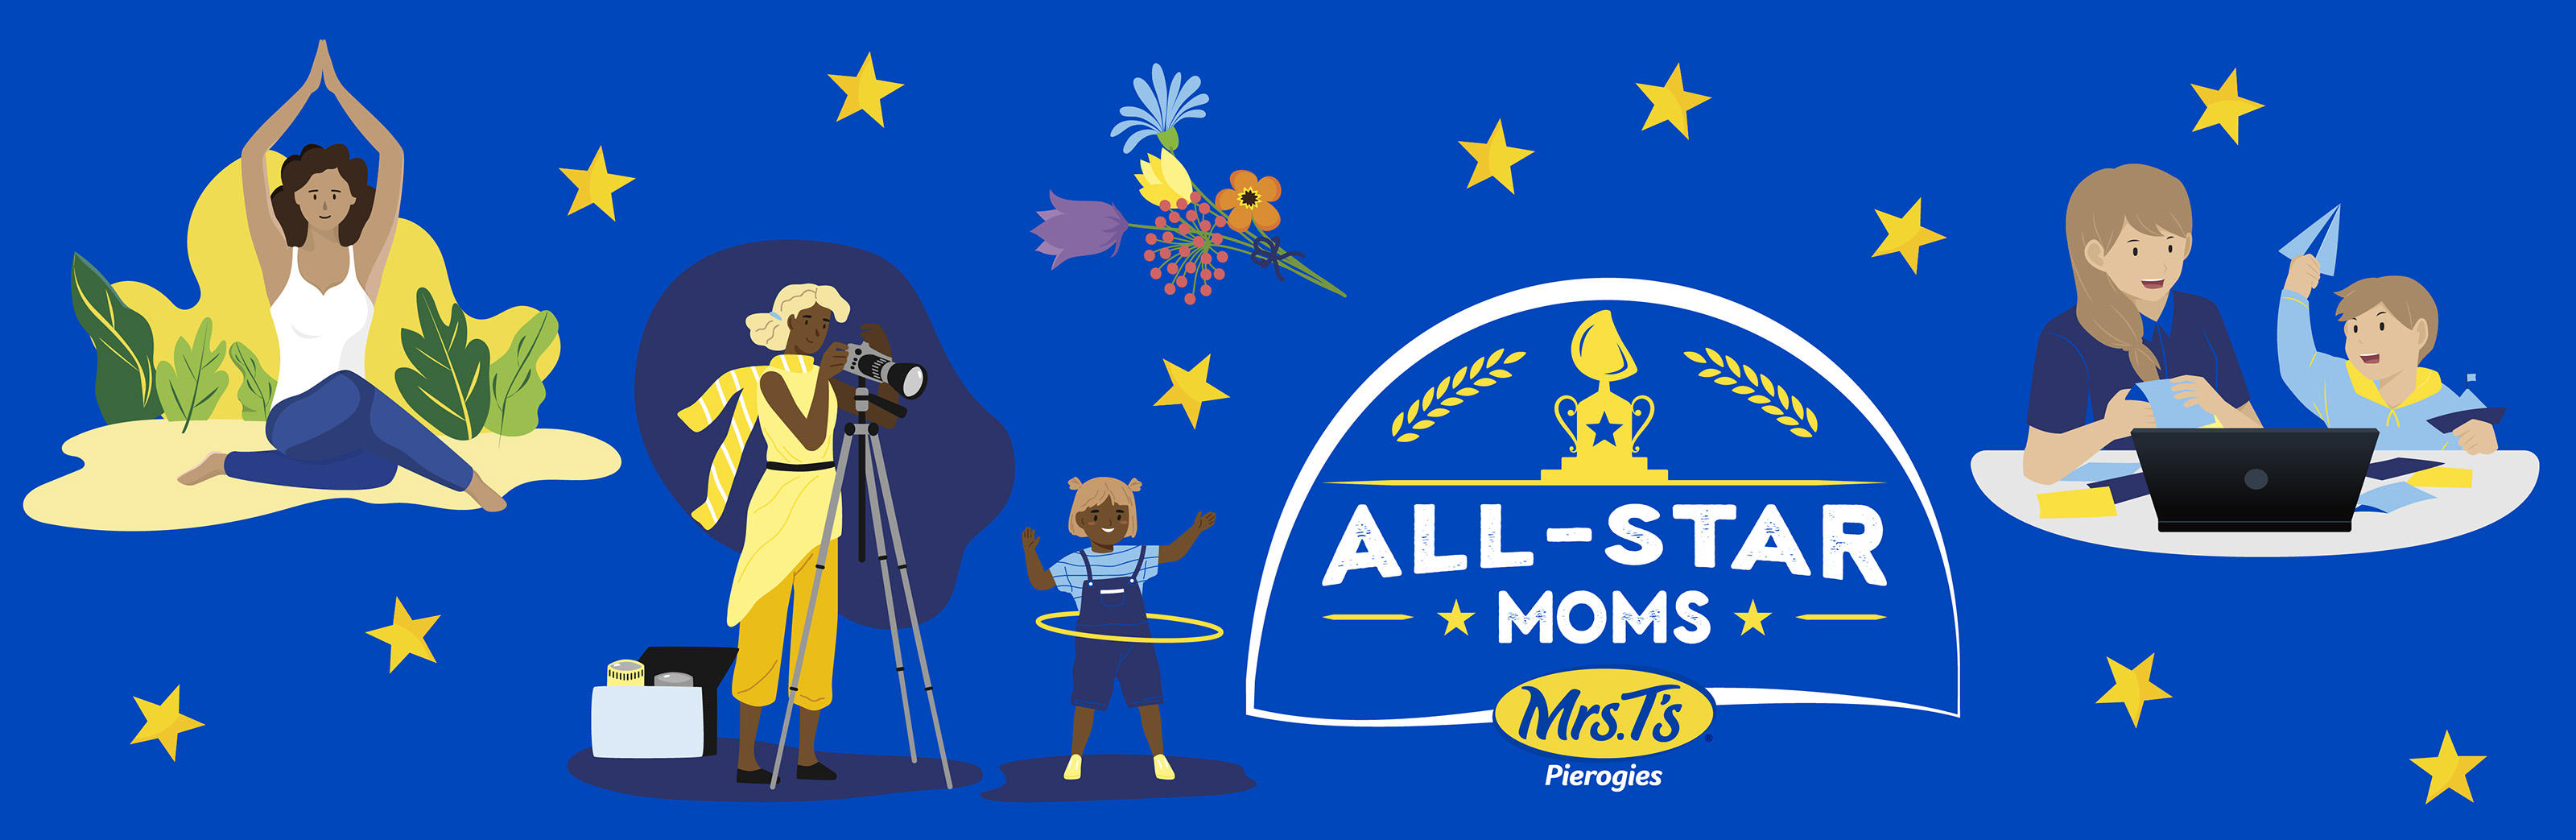 Mrs. T's Pierogies All-Star Moms banner